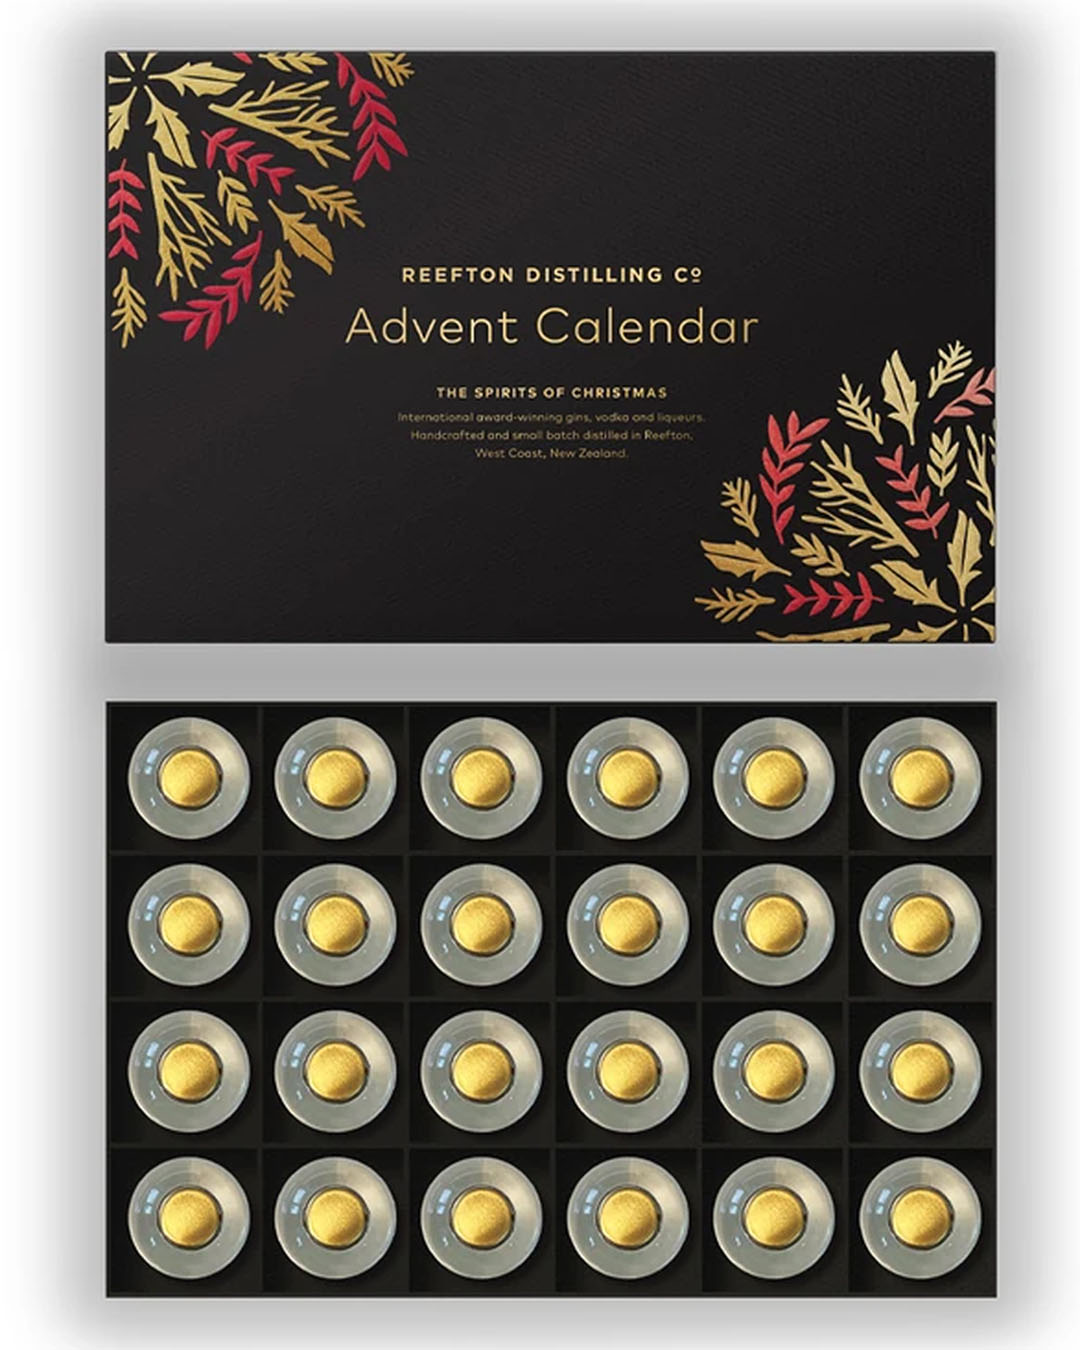 Reefton Distilling's Gin Advent Calendar.